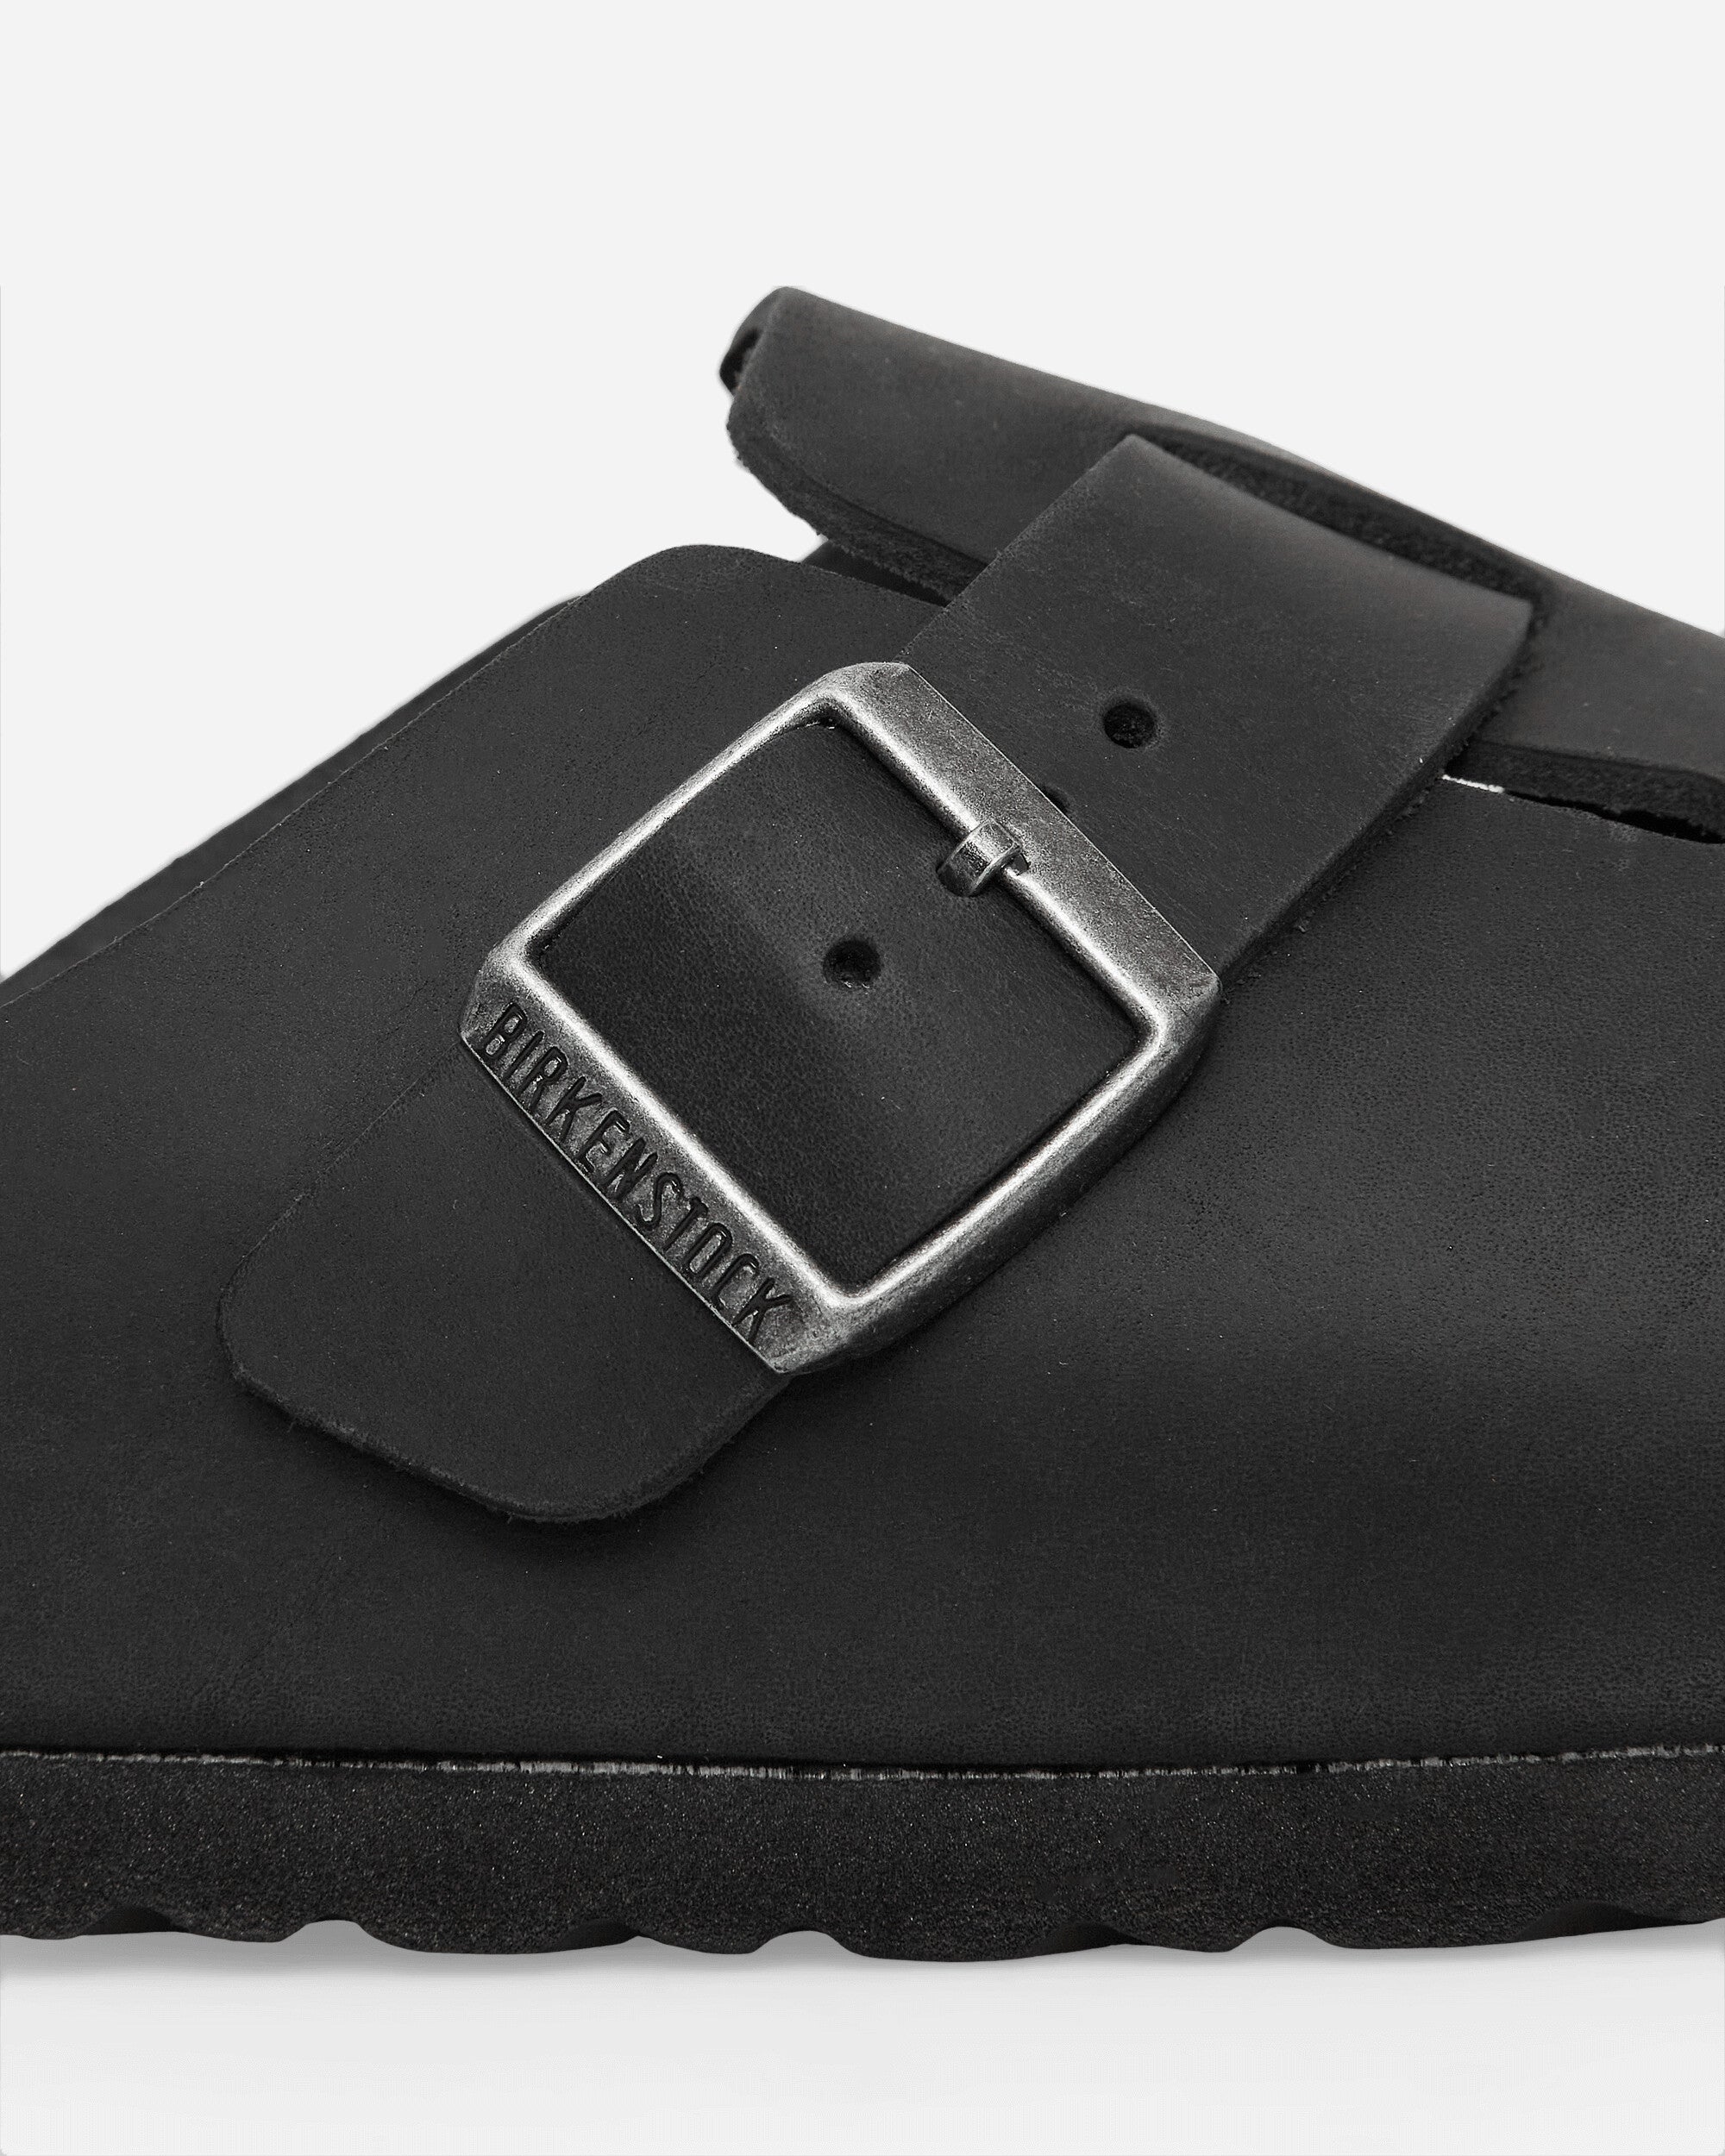 Birkenstock Boston Black  Sandals and Slides Sandals and Mules 059463 BLACK